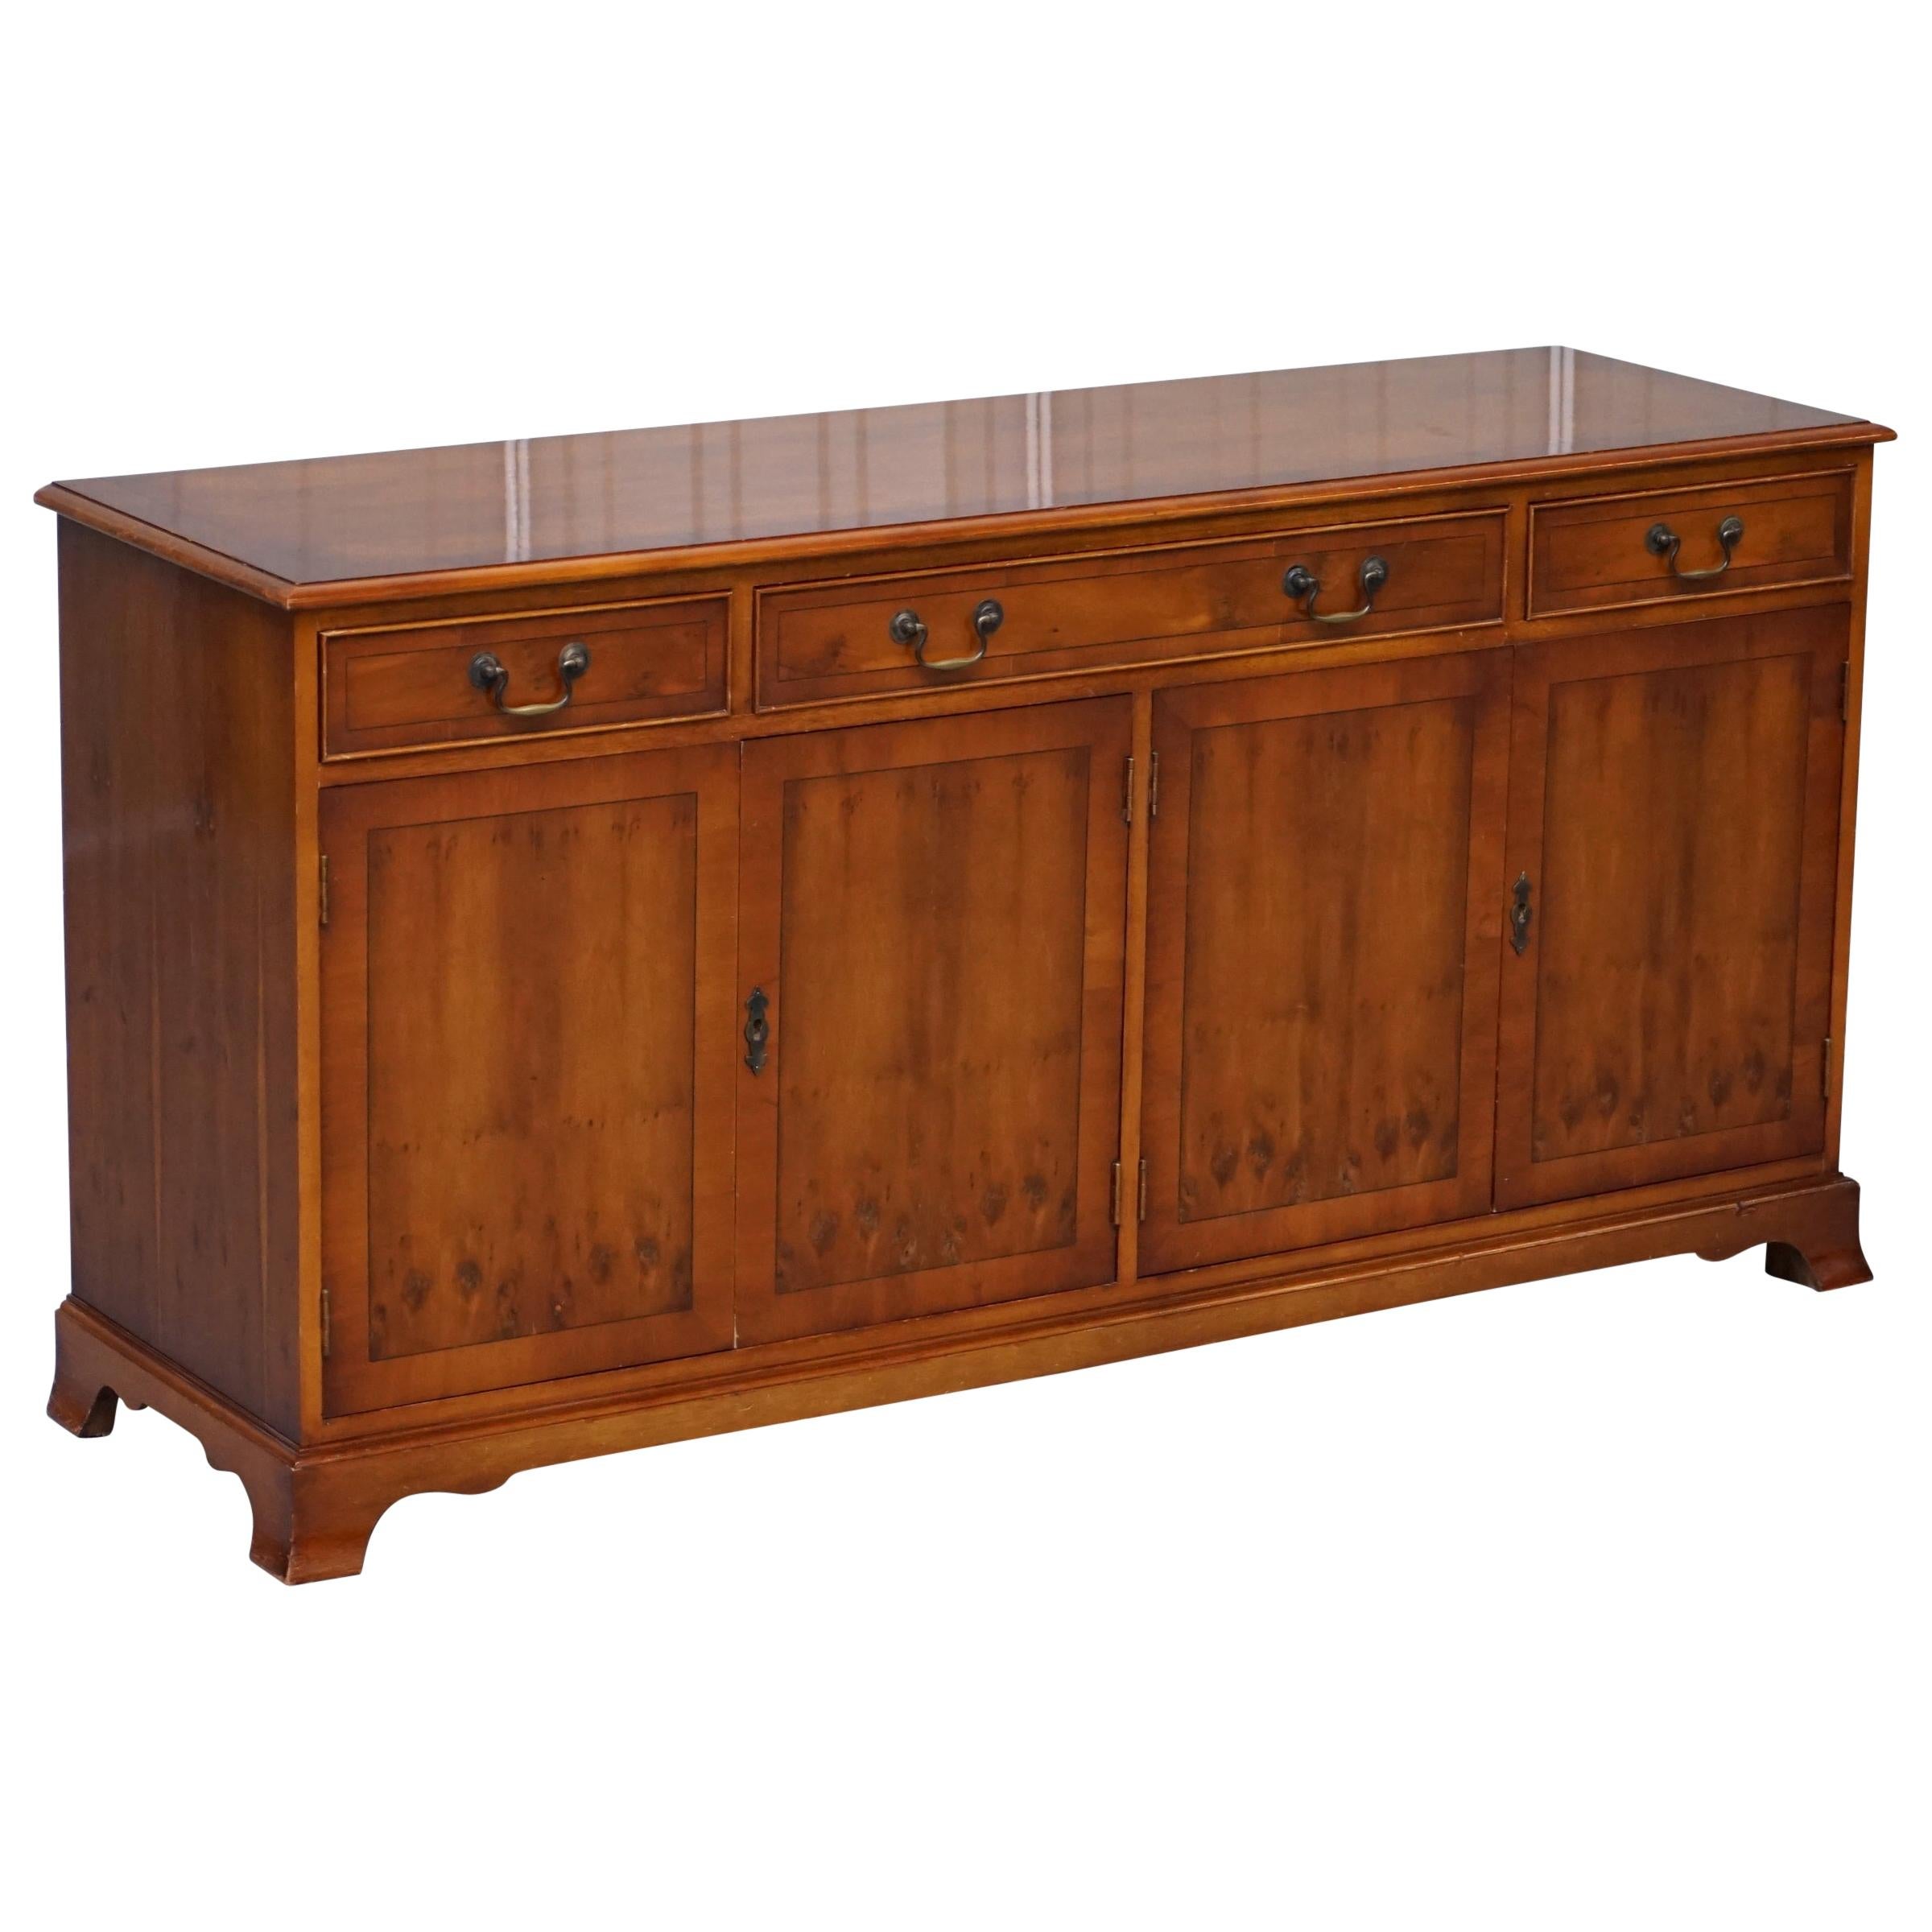 Made in England Bradley Furniture Burr Yew Wood Triple Drawer Sideboard Cupboard